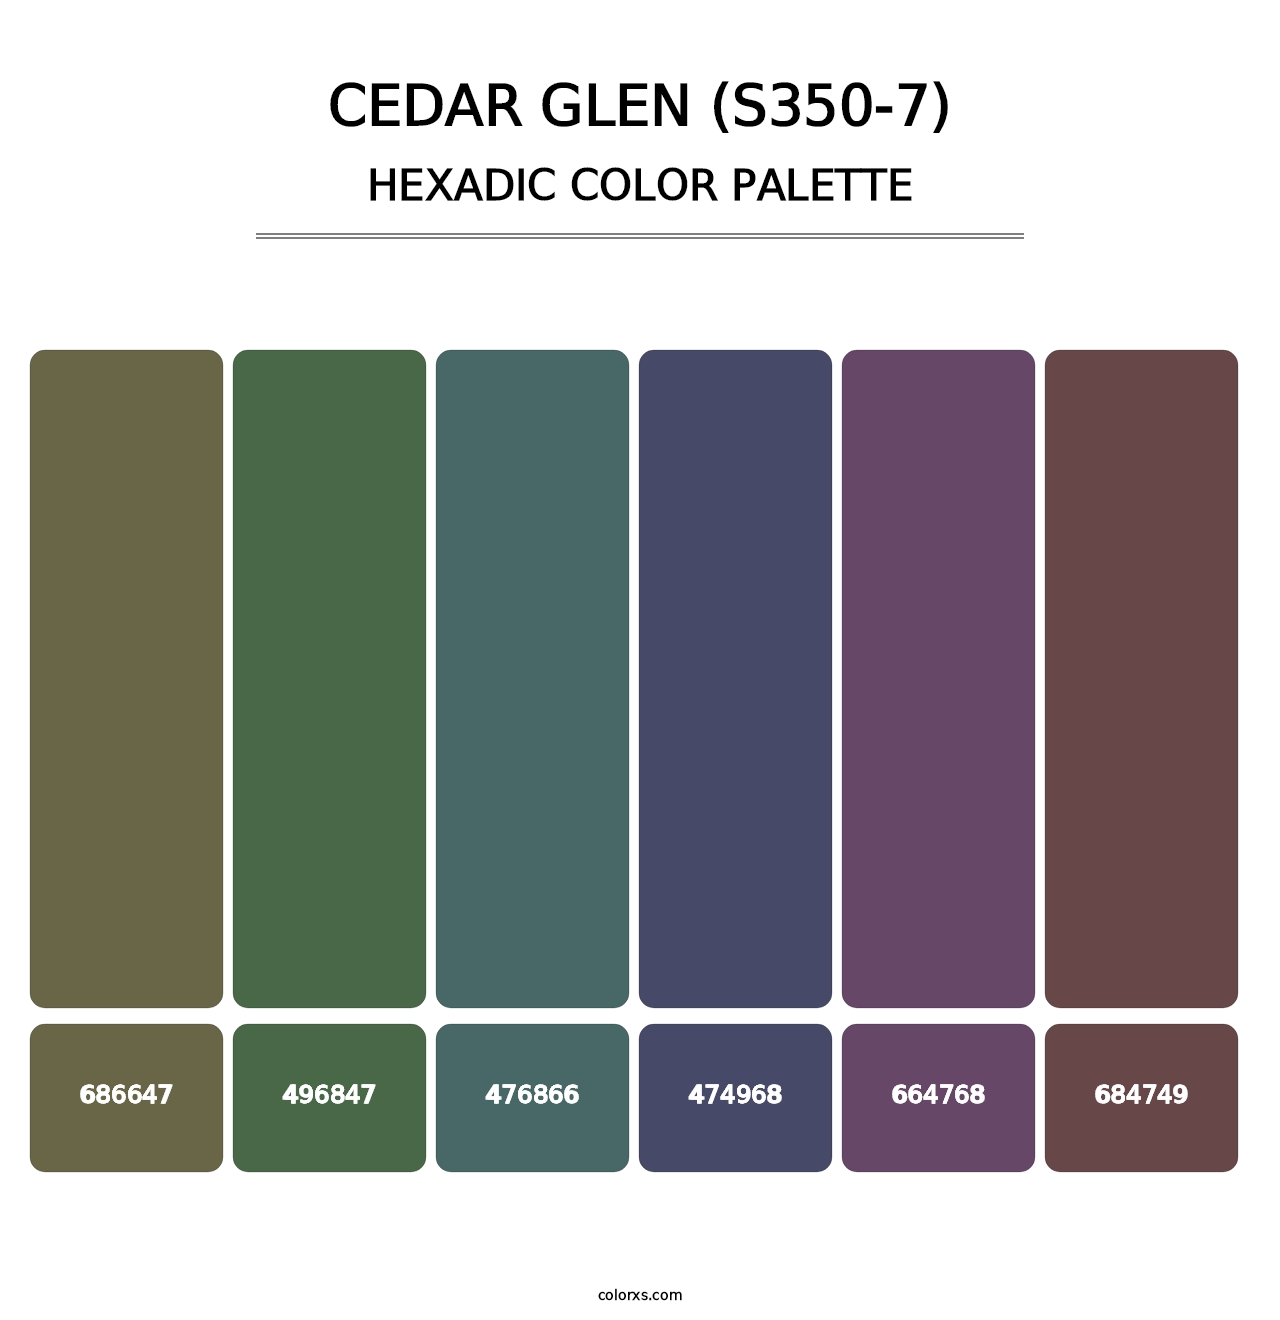 Cedar Glen (S350-7) - Hexadic Color Palette